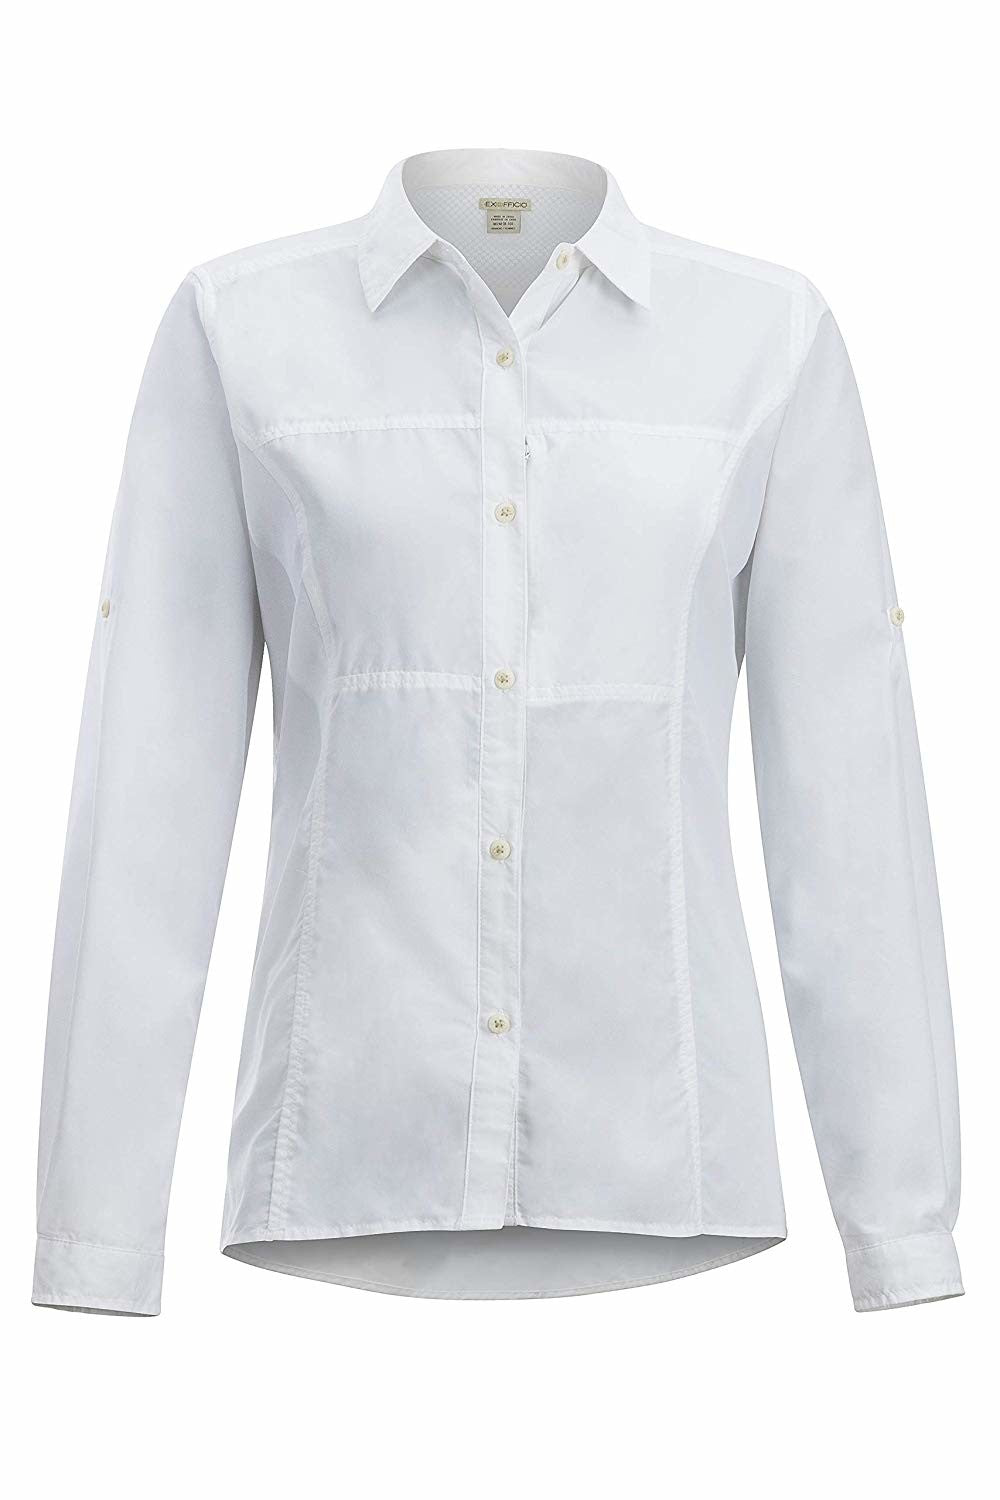 ExOfficio Women's Lightscape Long Sleeve Collared Shirt, White, X-Small